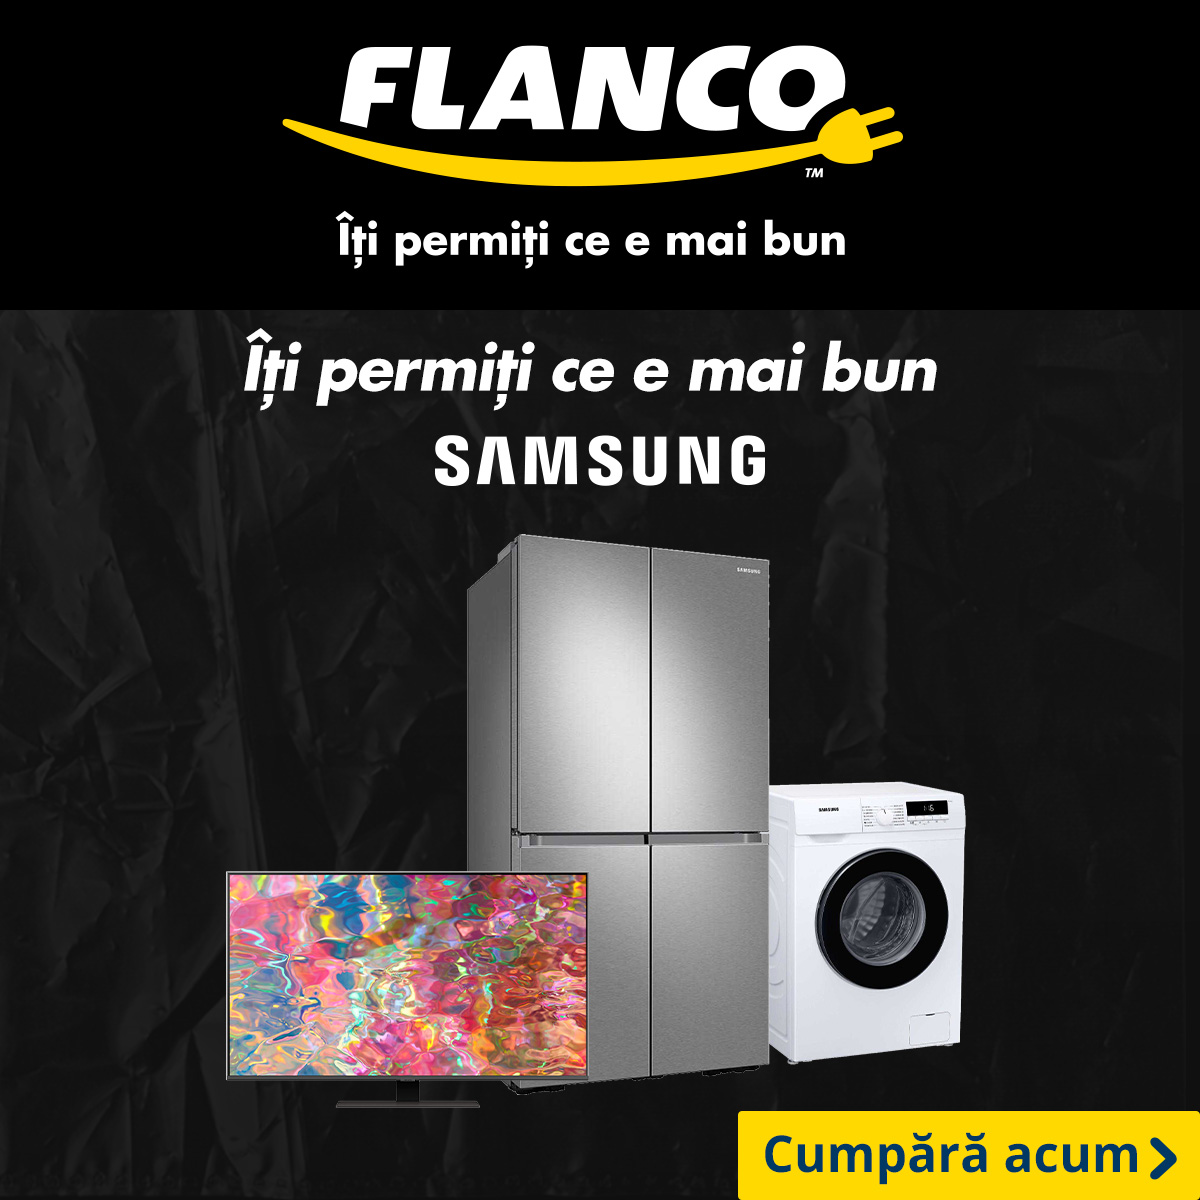 Flanco - Samsung in Black Friday